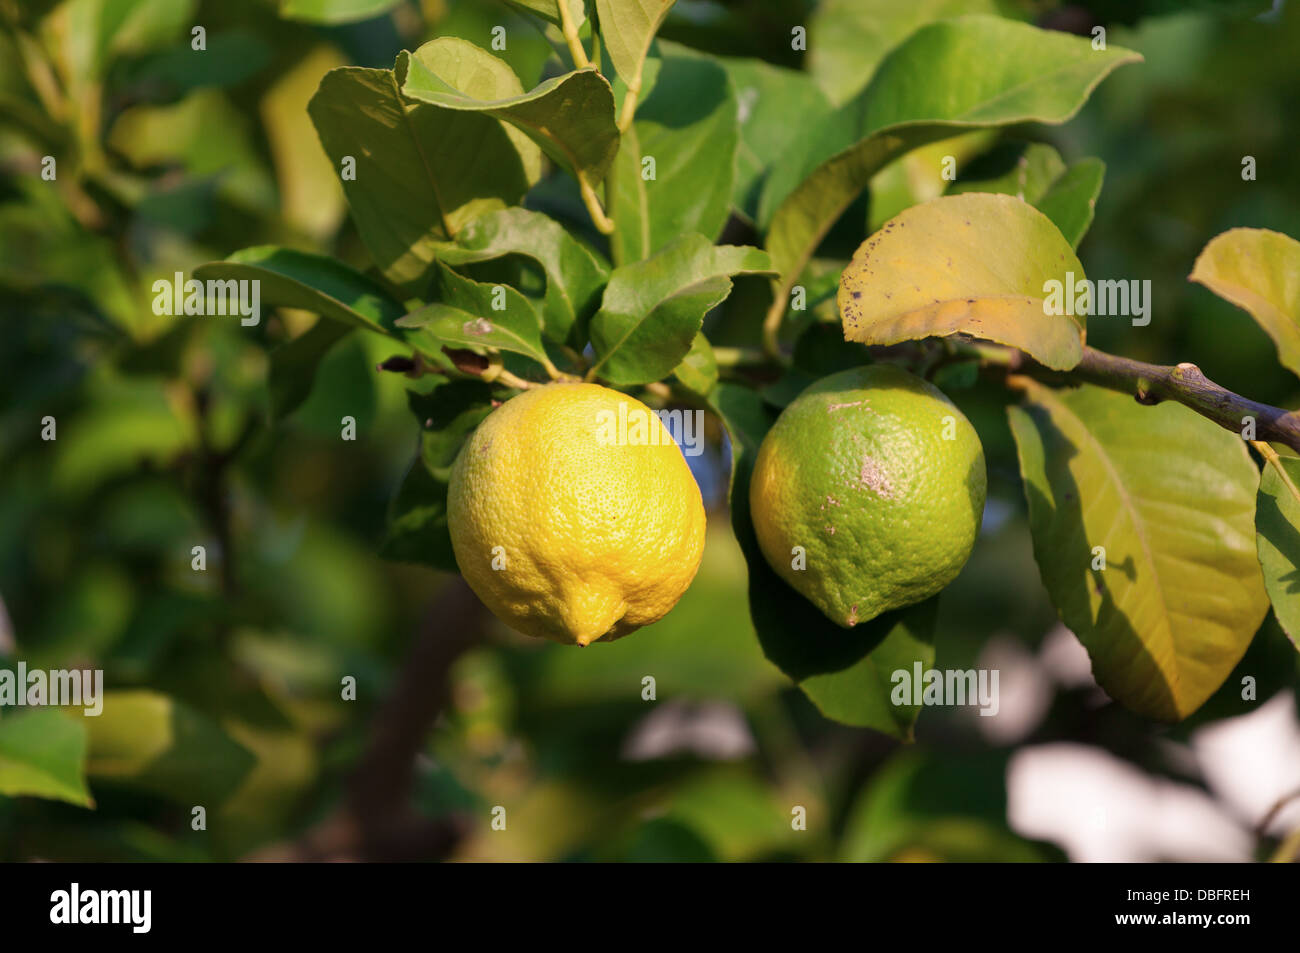 Yellow and green lemons hanging on tree, closeup Stock Photo